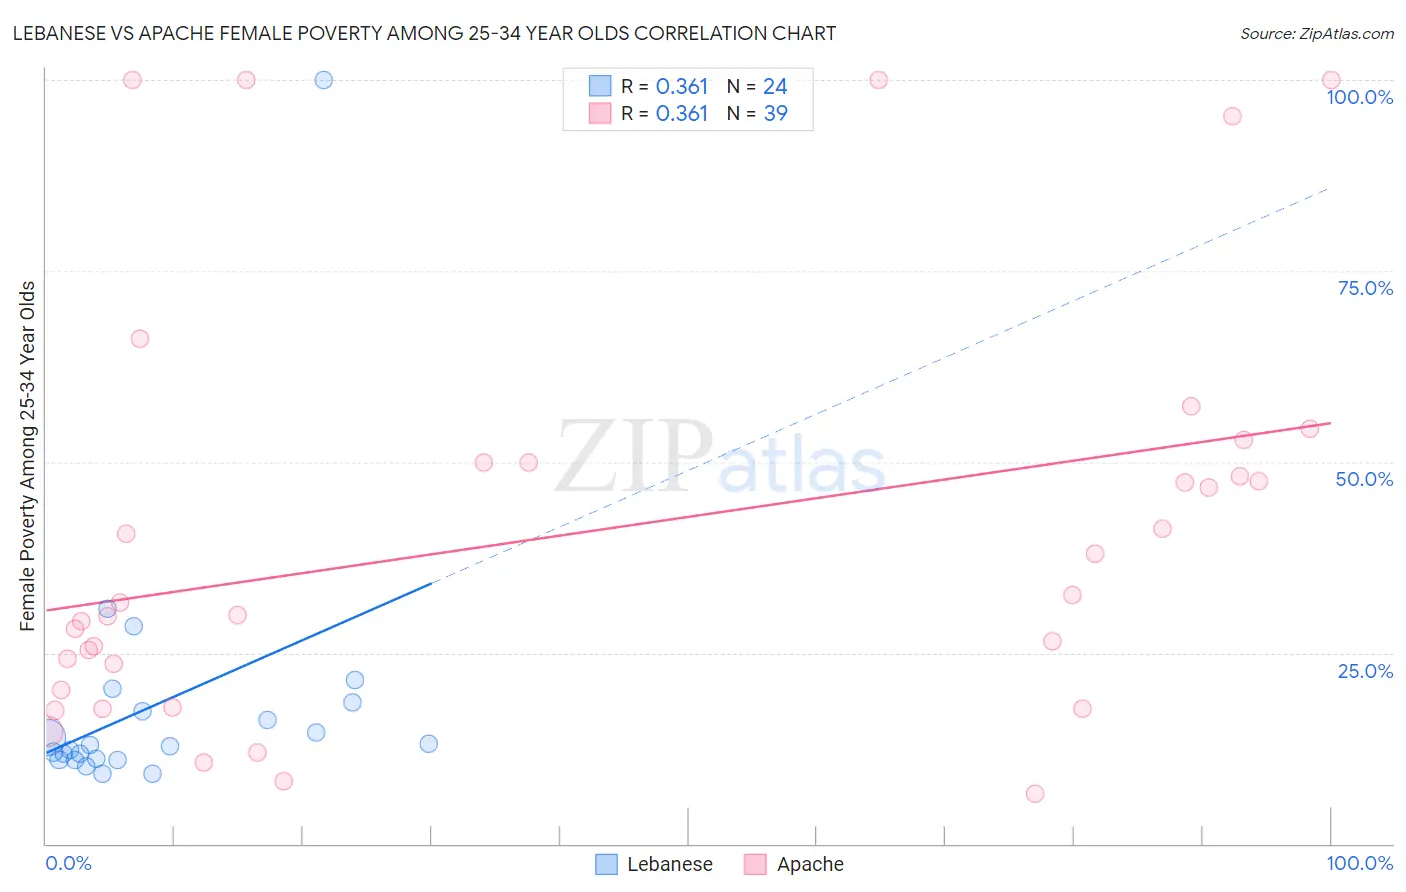 Lebanese vs Apache Female Poverty Among 25-34 Year Olds